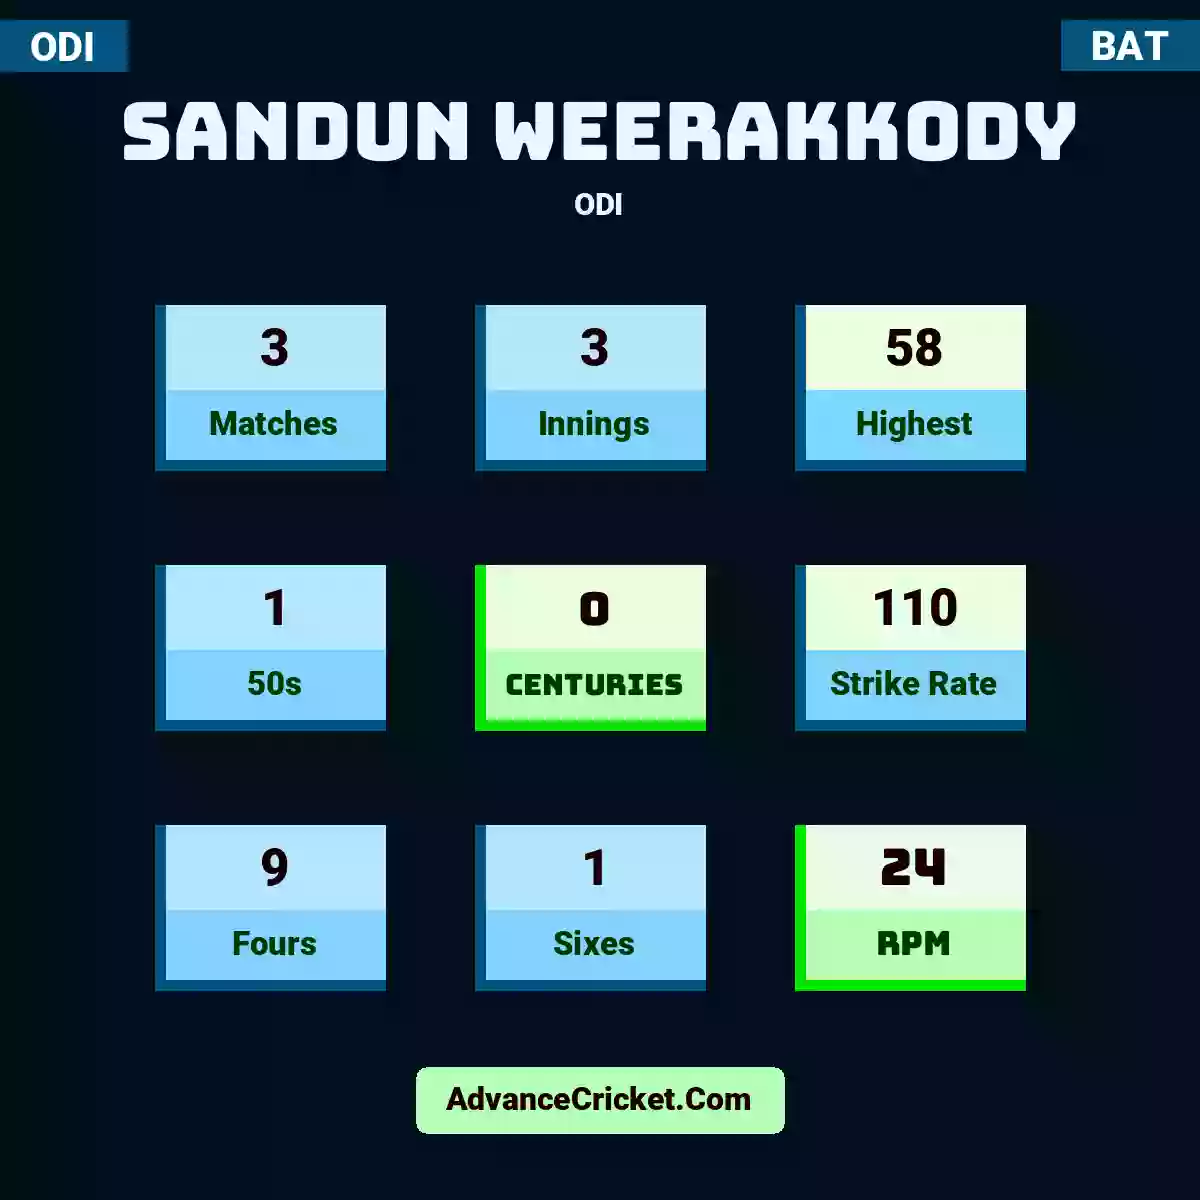 Sandun Weerakkody ODI , Sandun Weerakkody played 3 matches, scored 58 runs as highest, 1 half-centuries, and 0 centuries, with a strike rate of 110. S.Weerakkody hit 9 fours and 1 sixes, with an RPM of 24.